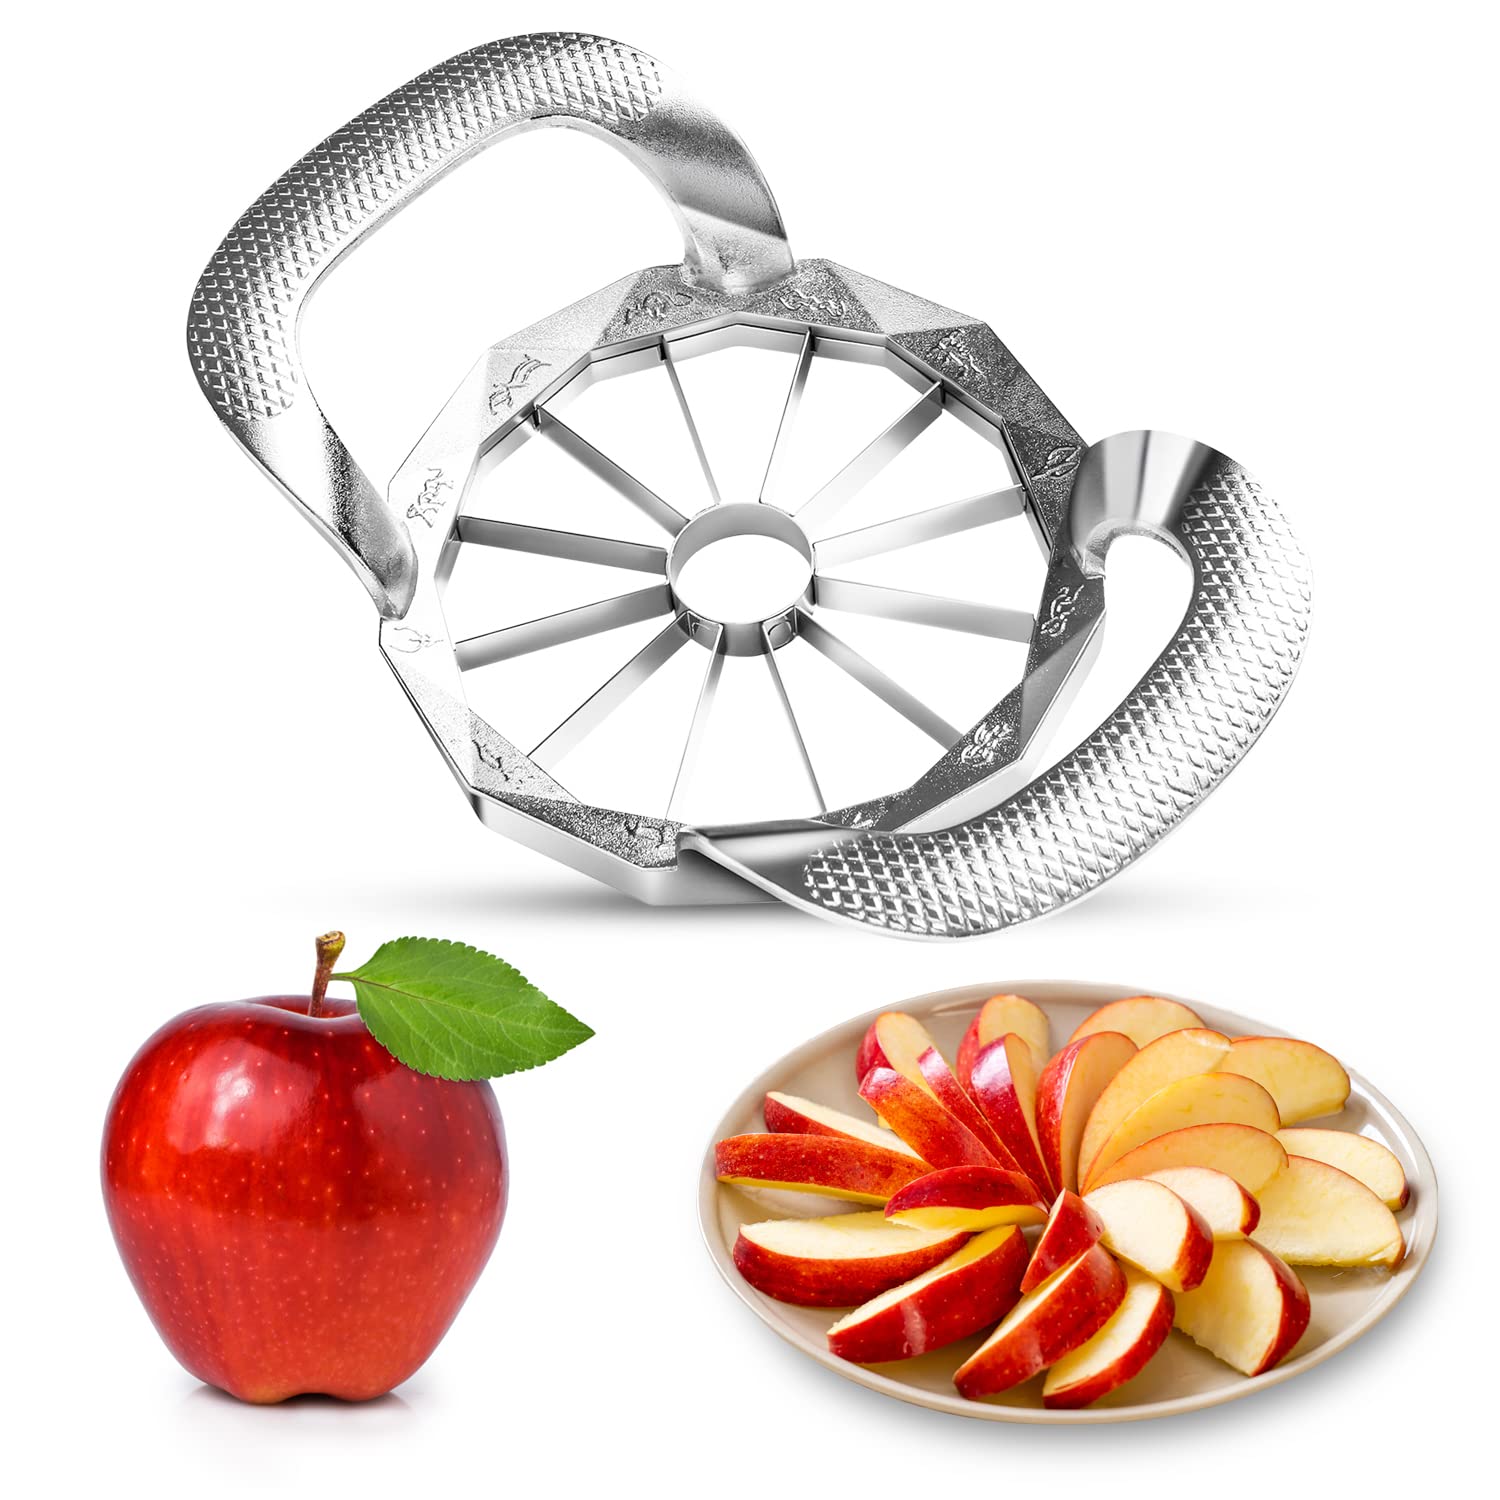 OTLS Apple Slicer 12 Slices